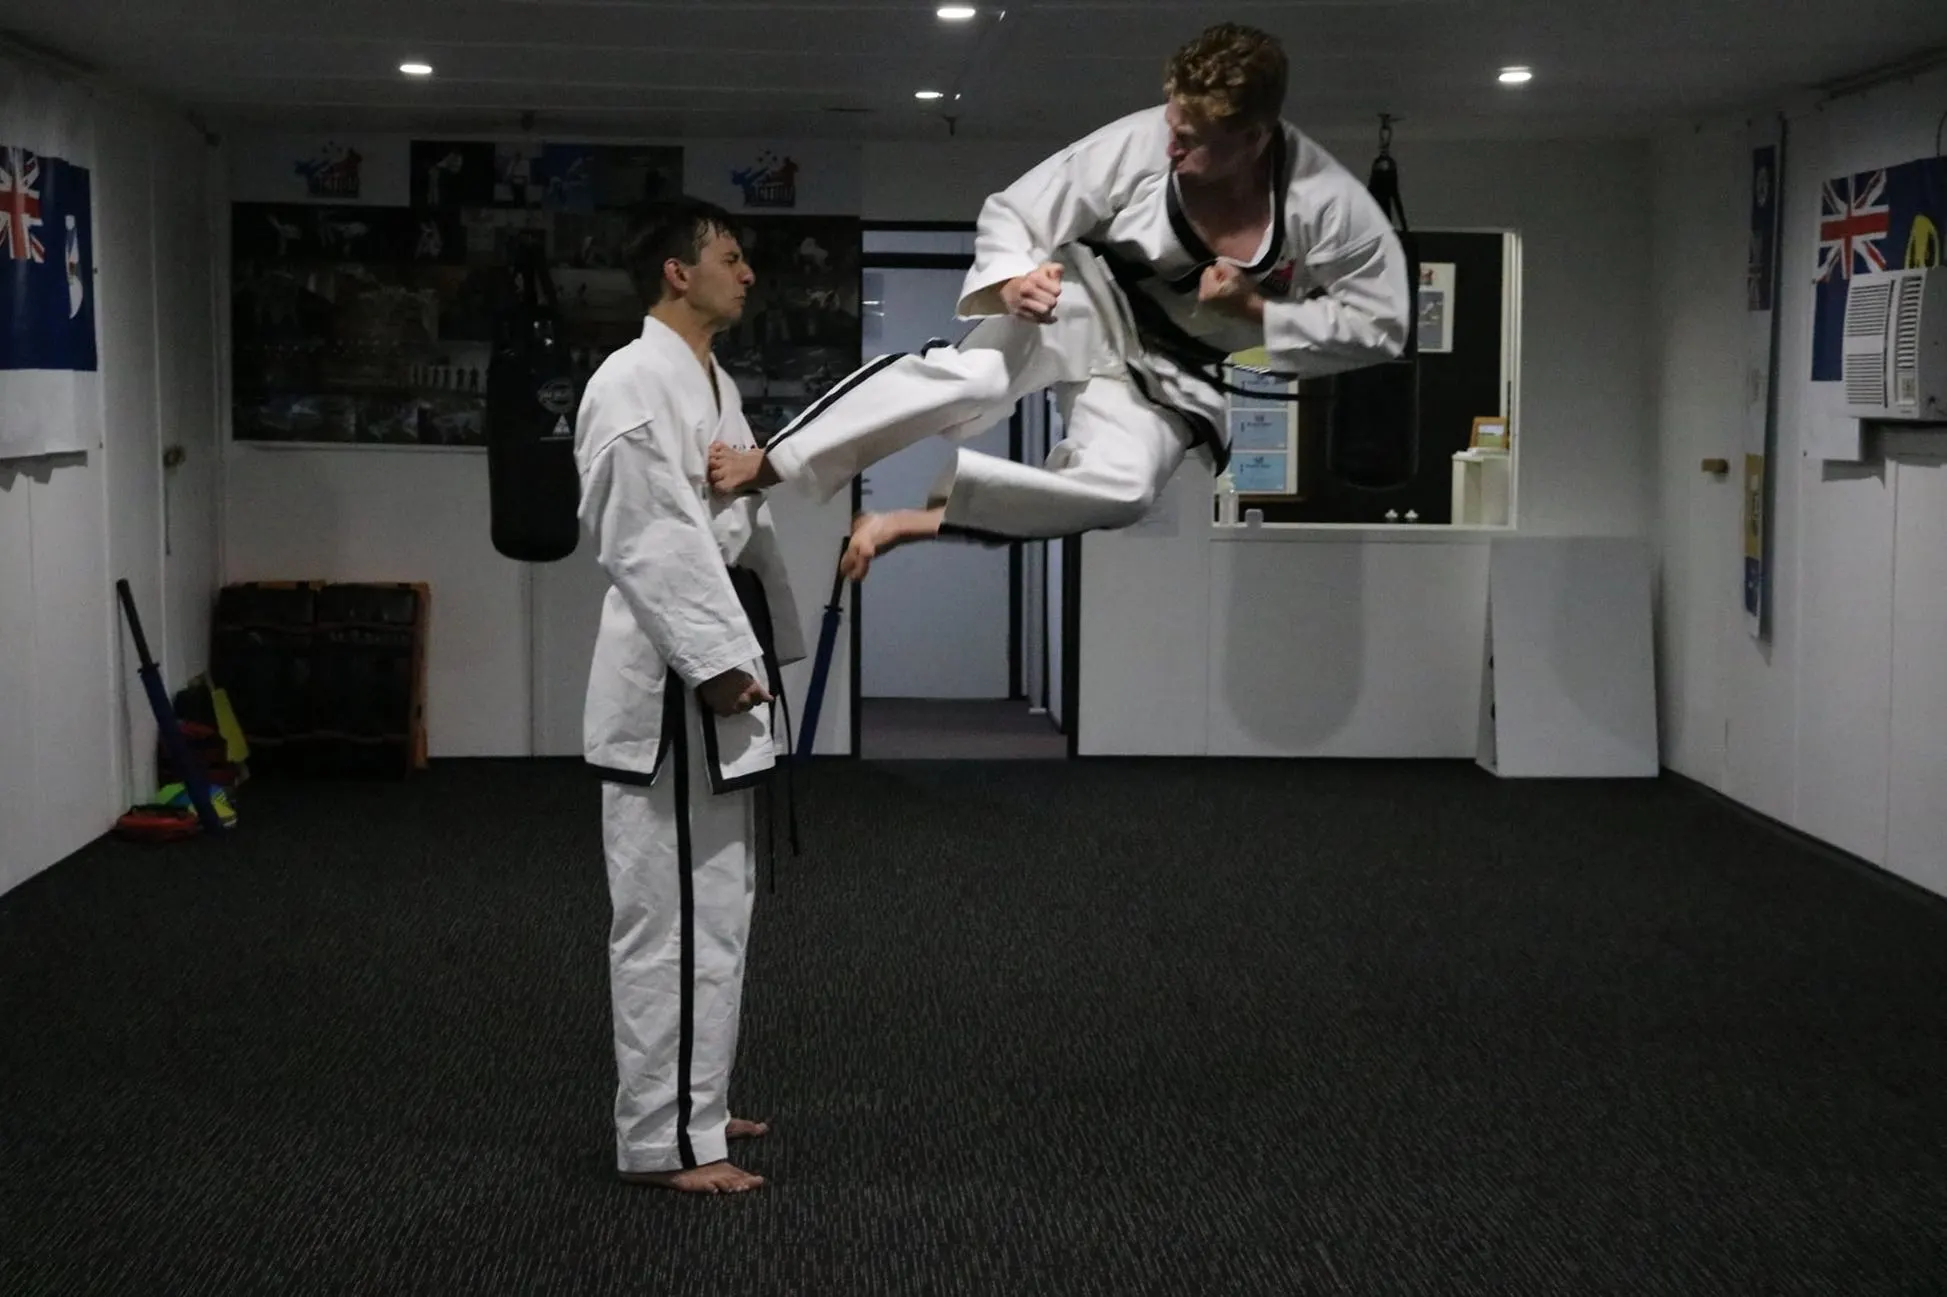 Action Tae Kwon-Do, Australia's Leading Martial Arts School.